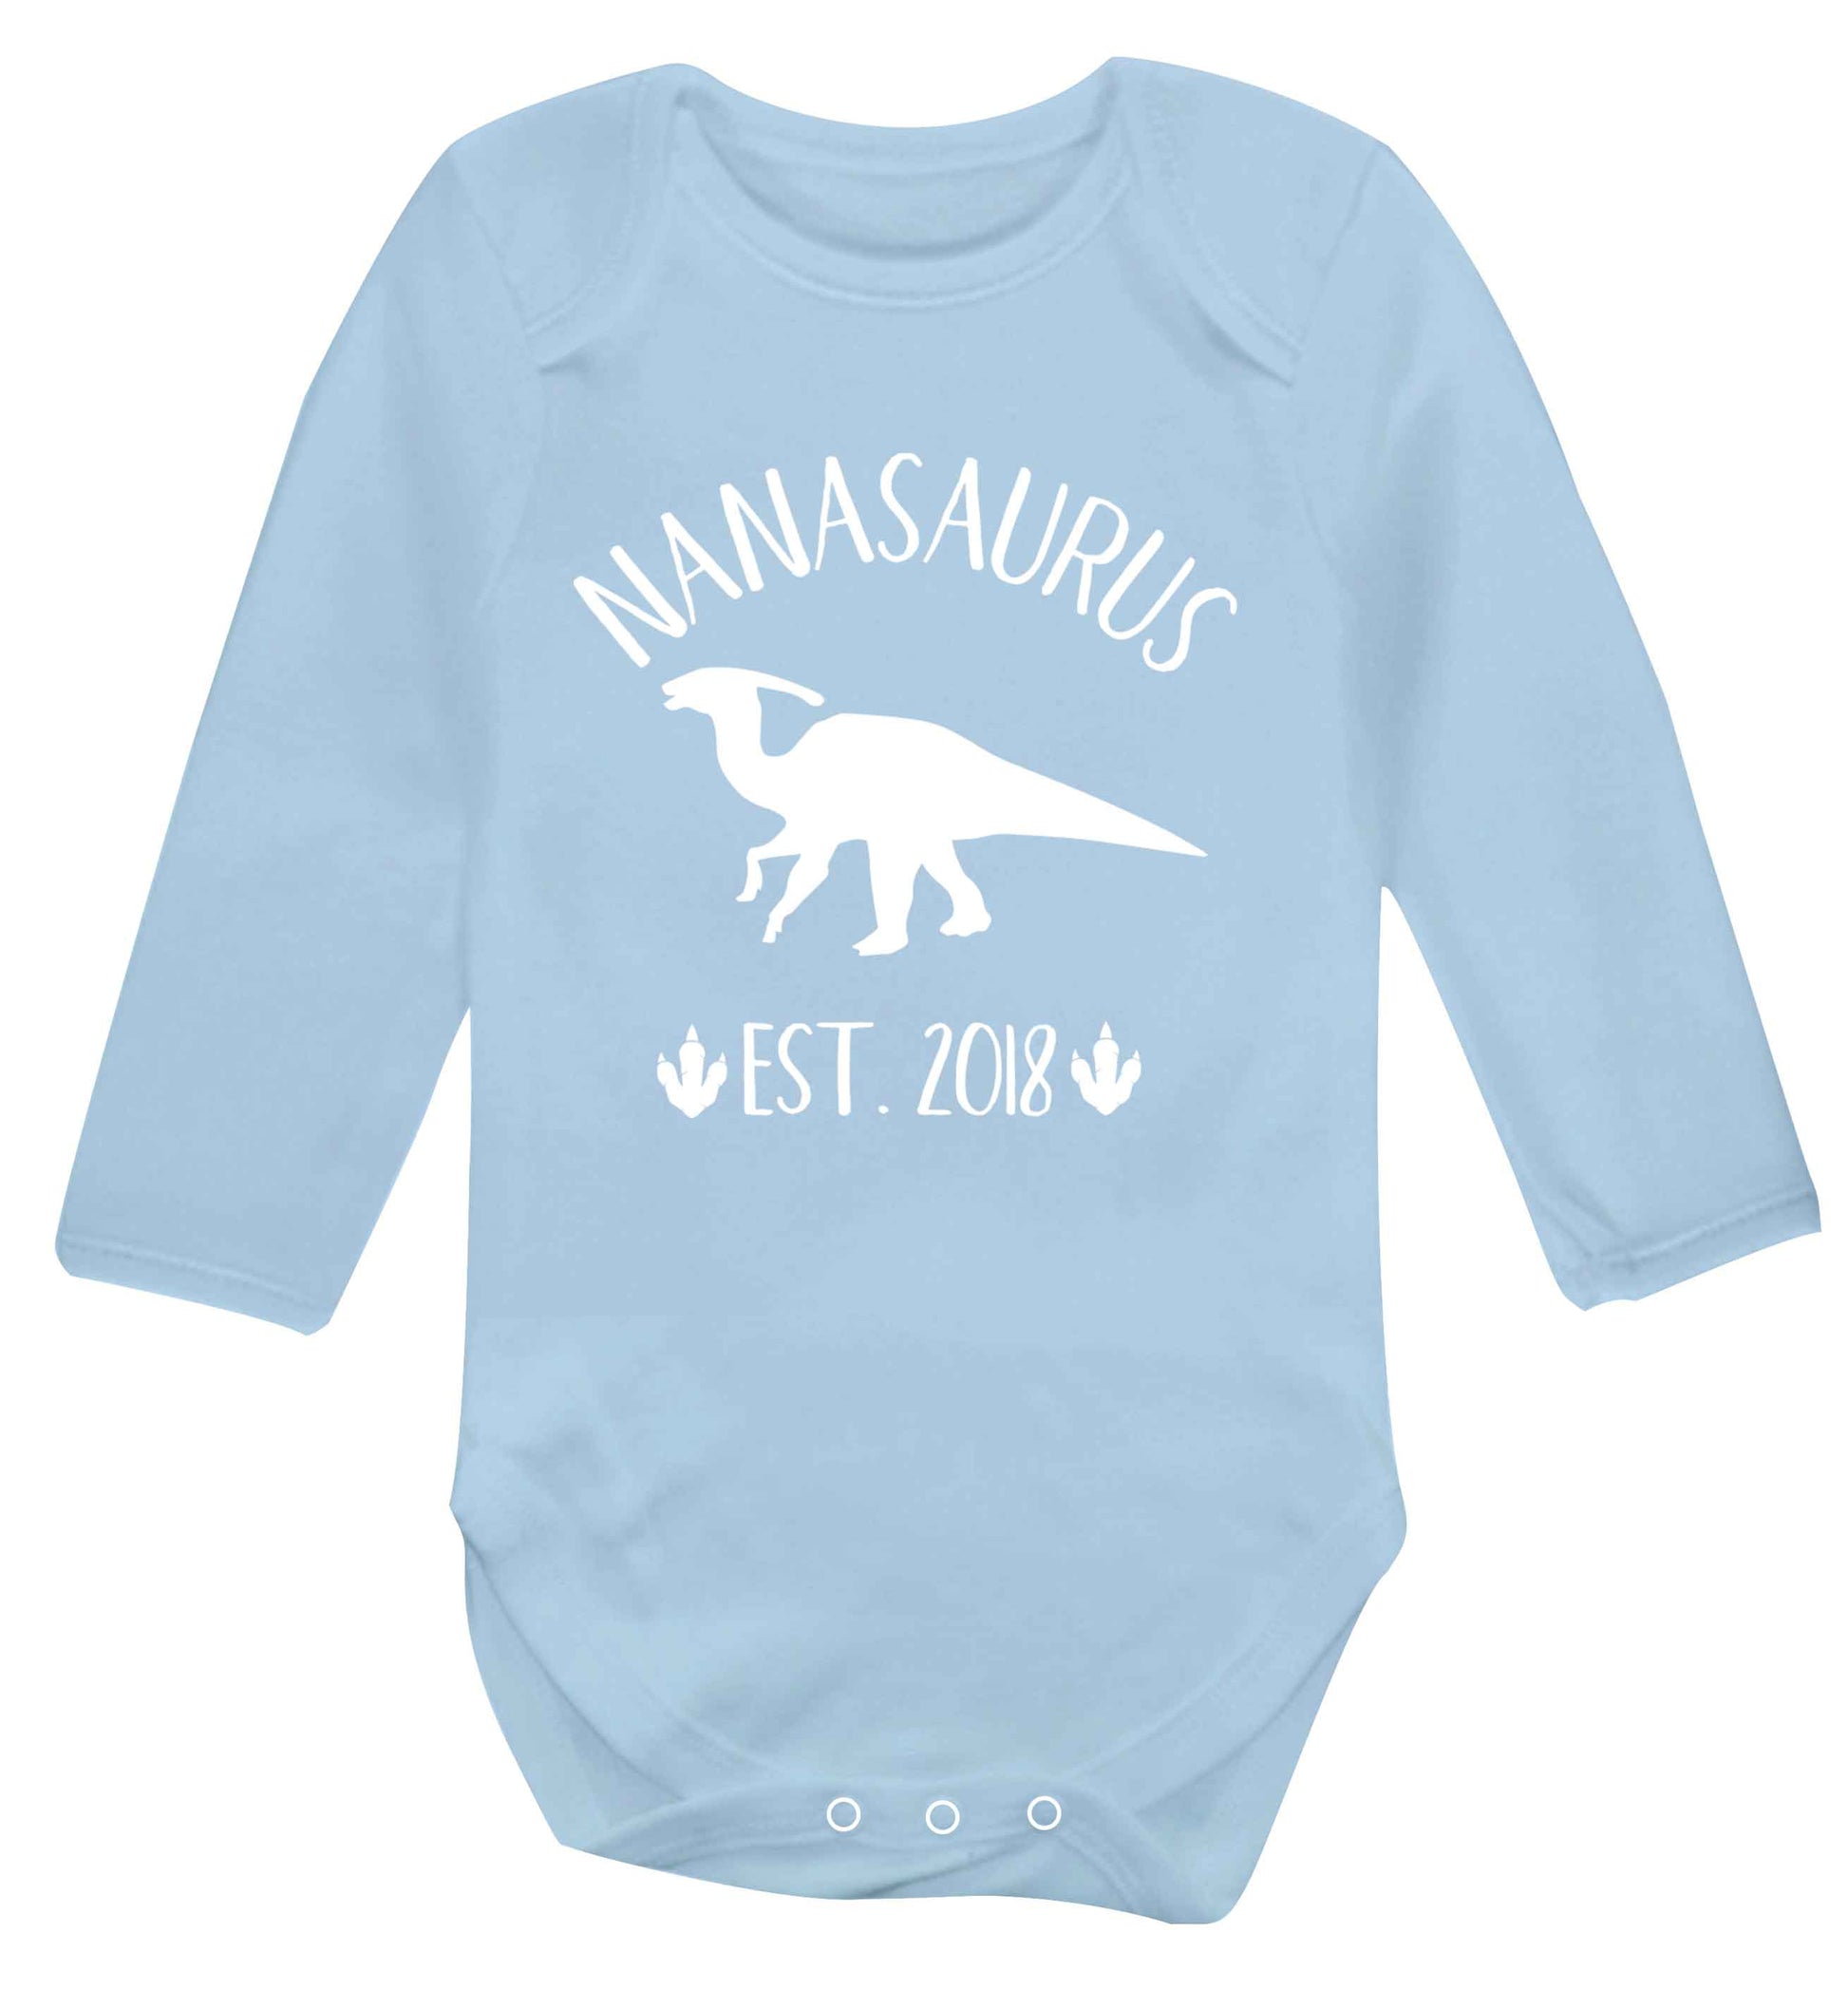 Personalised nanasaurus since (custom date) Baby Vest long sleeved pale blue 6-12 months